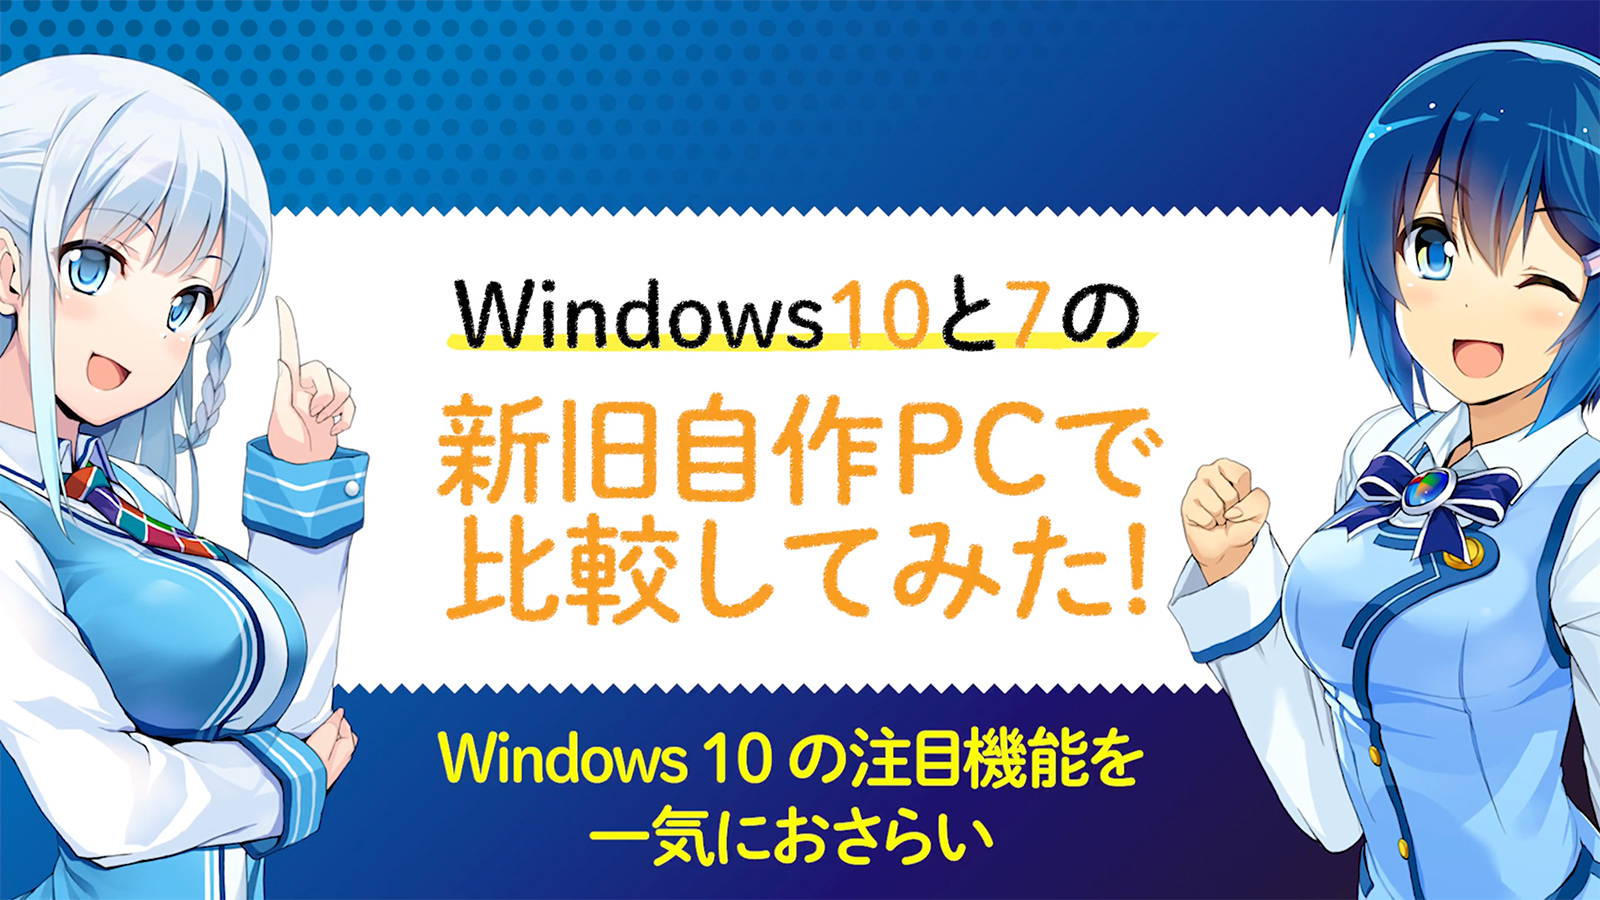 Windows10 壁紙 アニメ Kabegamikopi